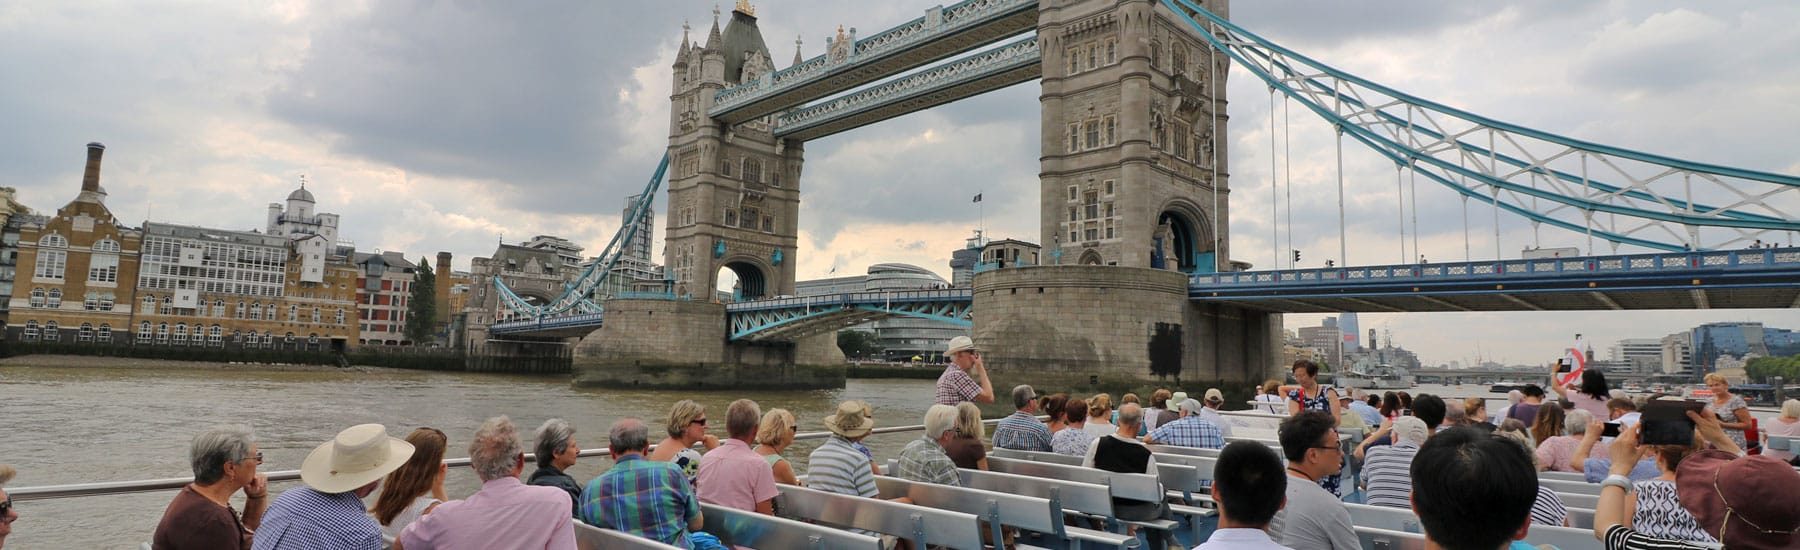 MV Thomas Doggett vorbei an der Tower Bridge, London